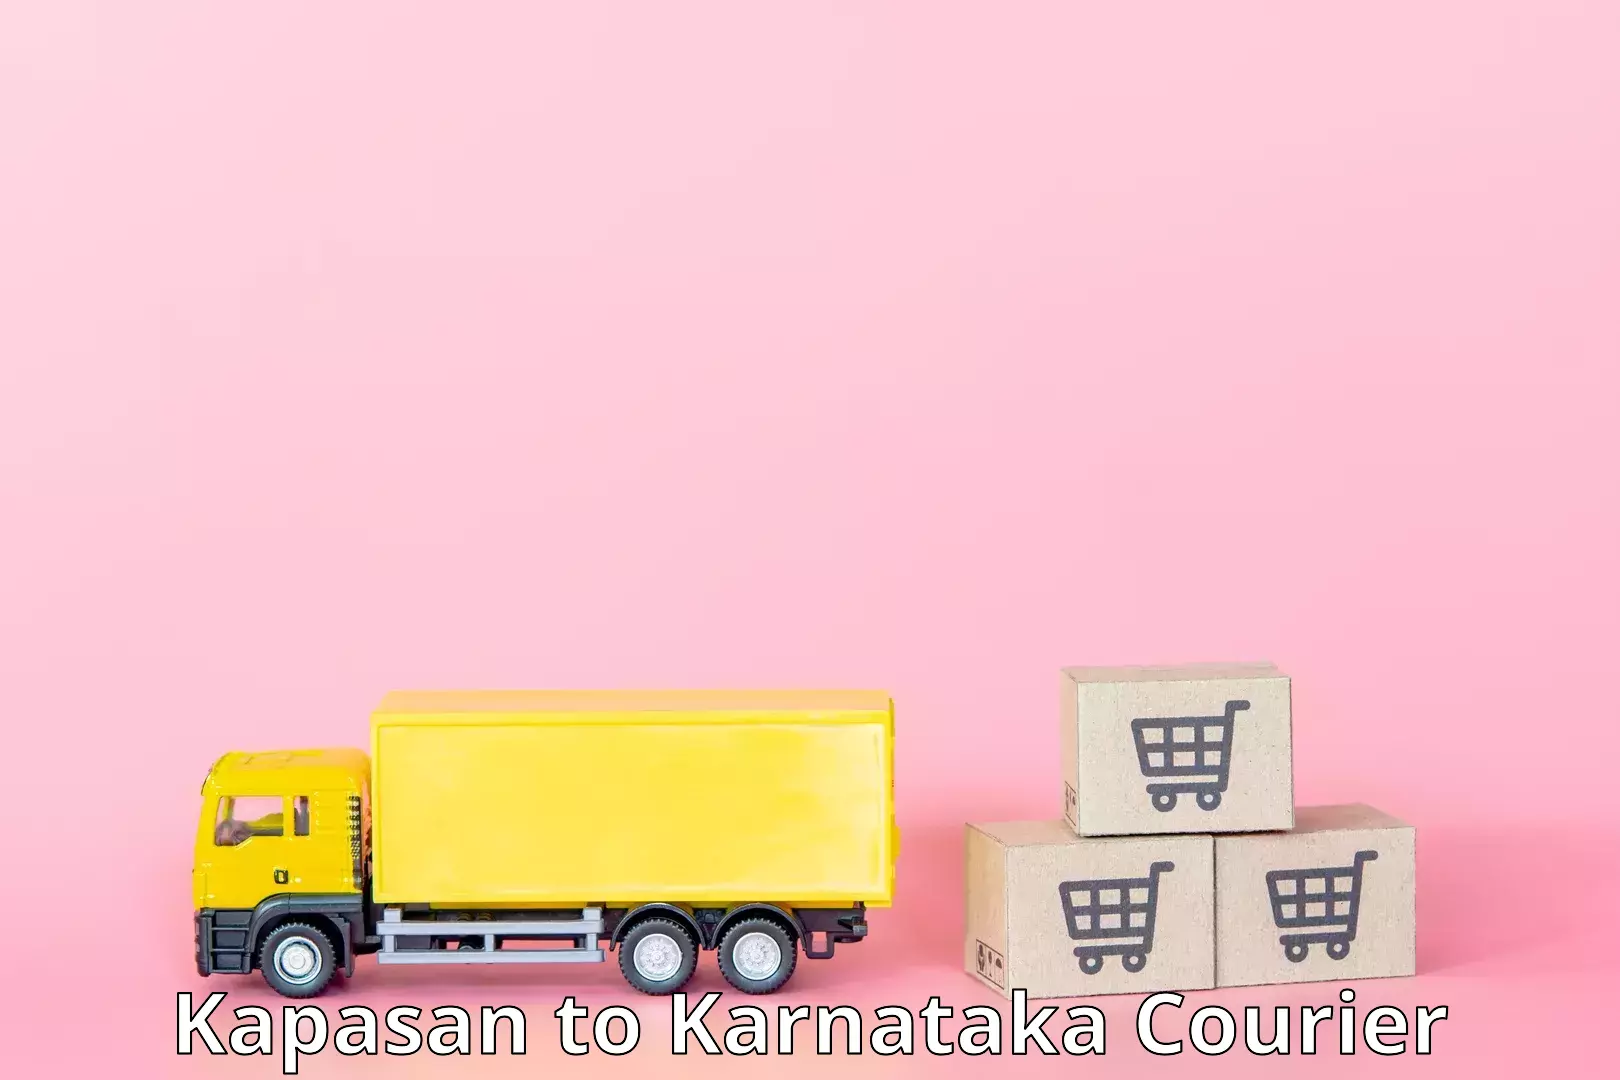 Global logistics network Kapasan to Karnataka